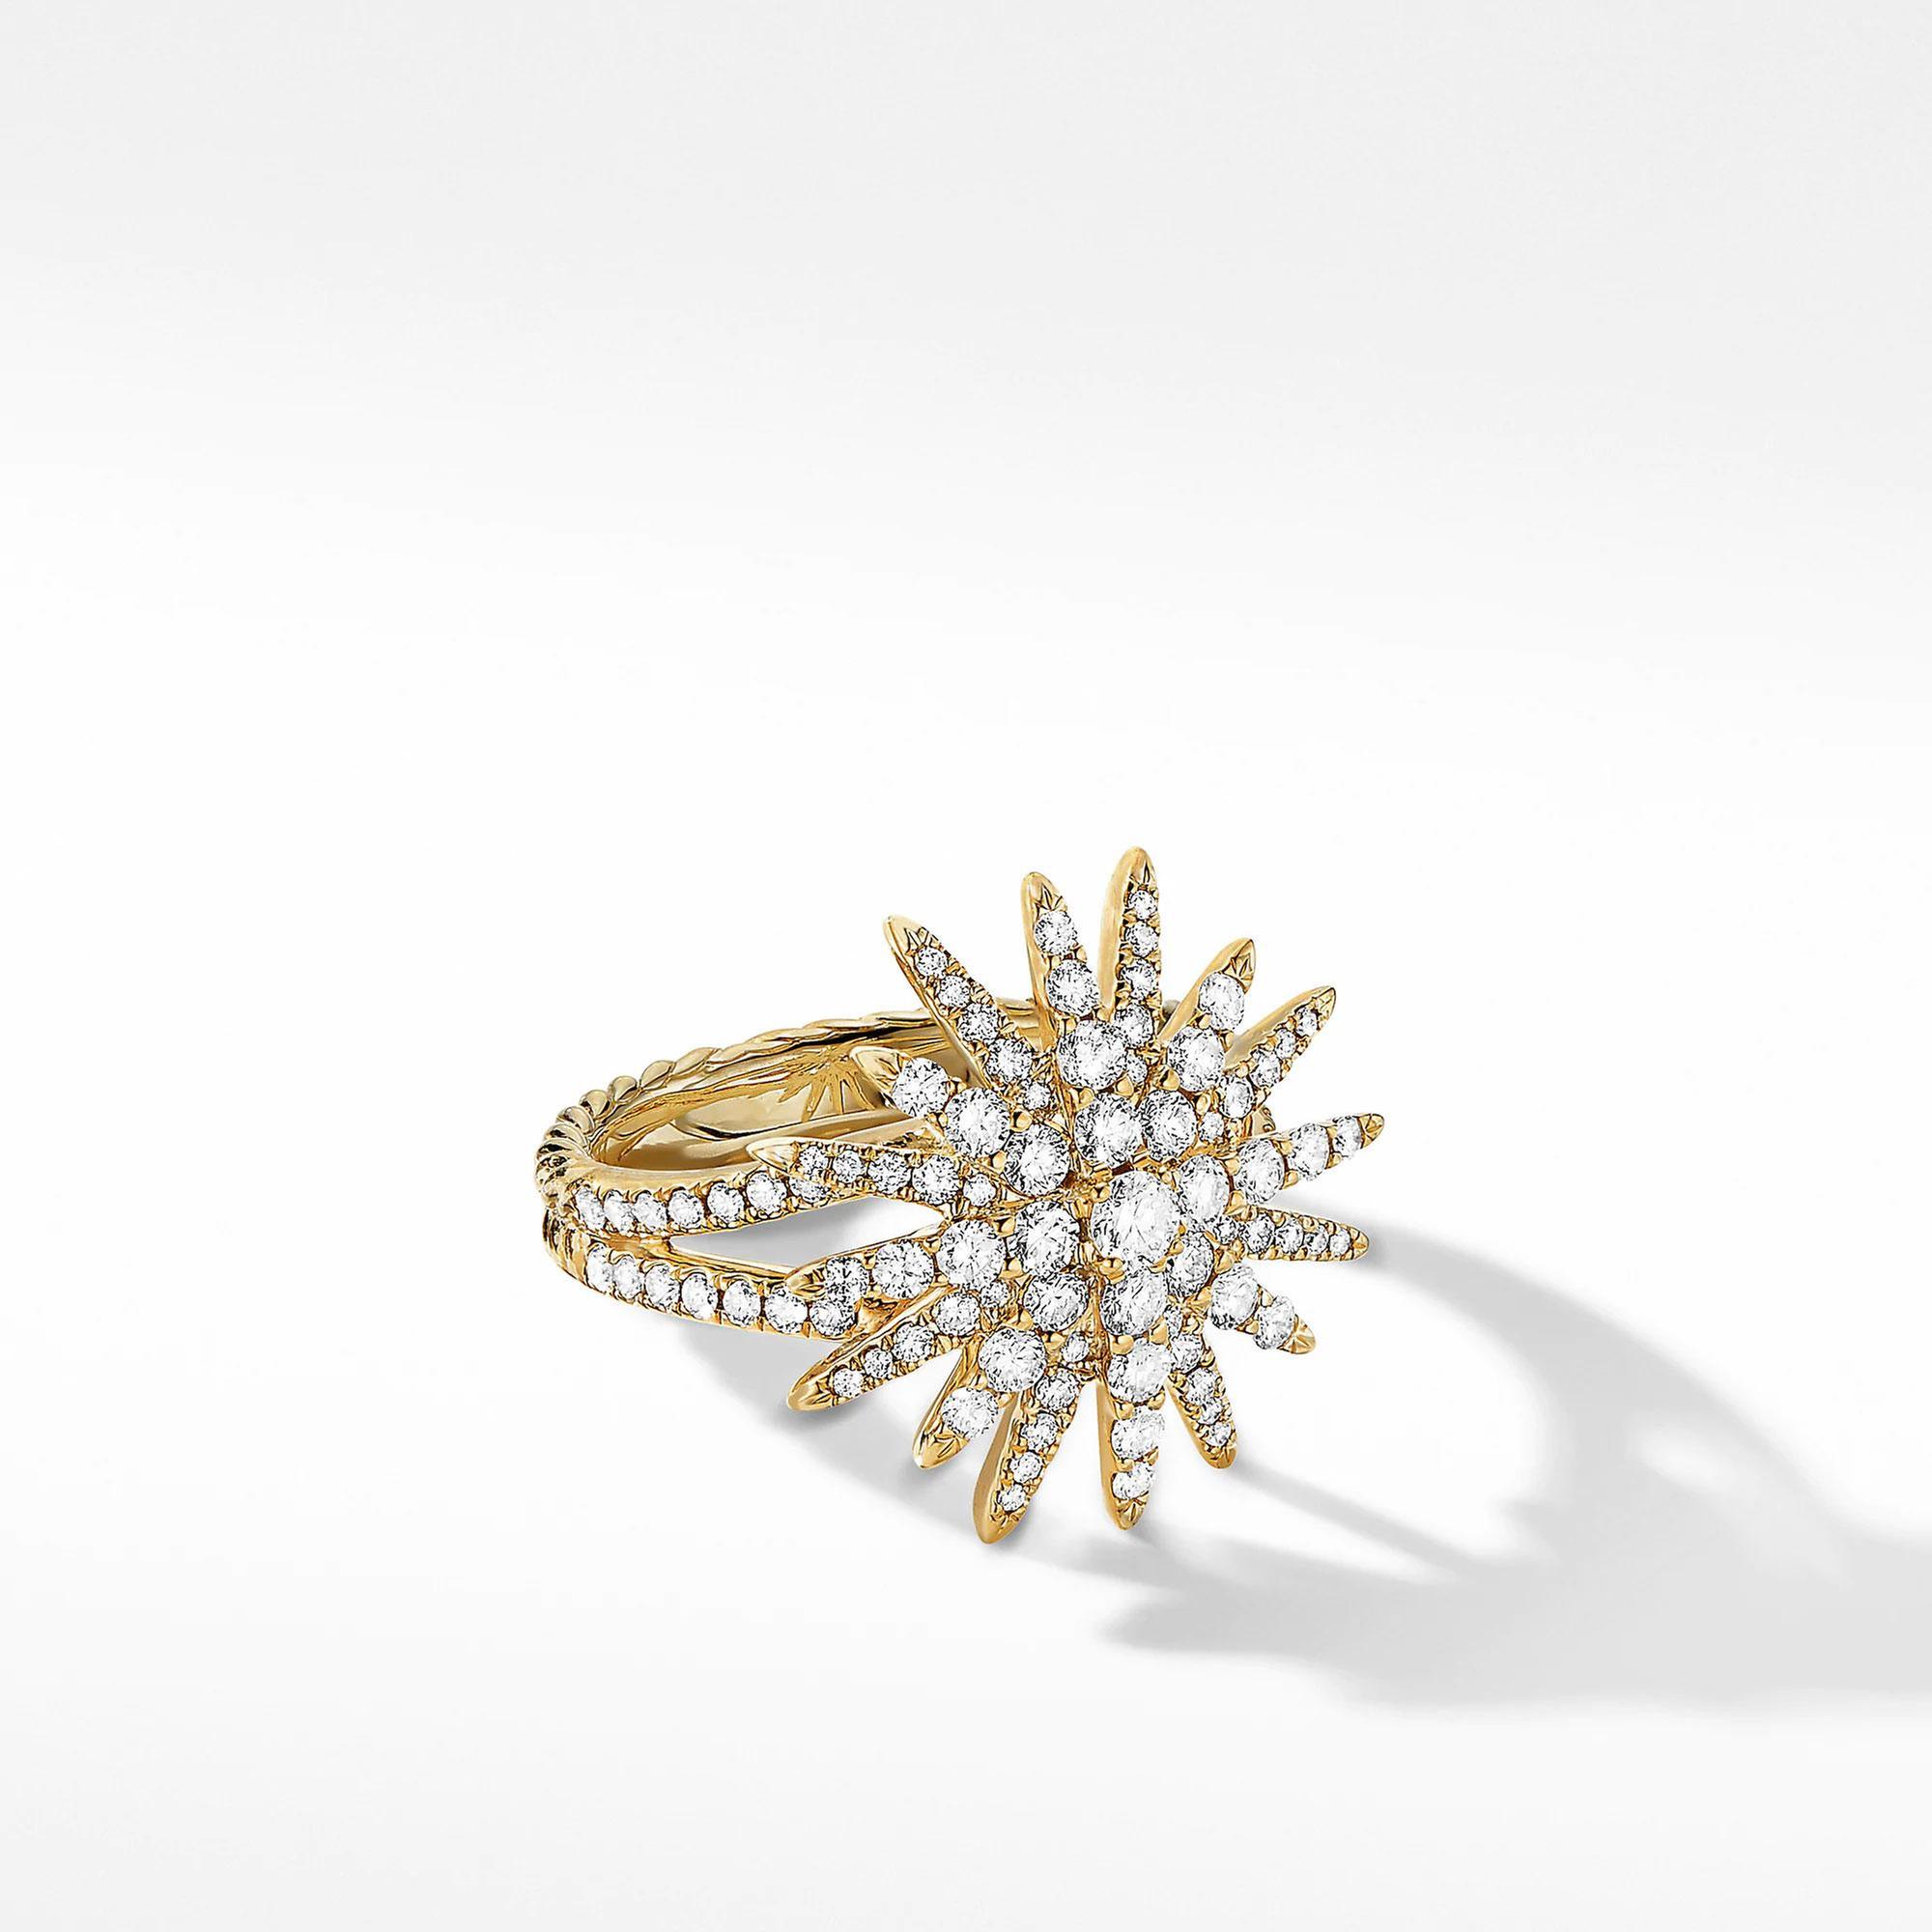 David Yurman Starburst Ring in 18k Yellow Gold with Full Pave Diamonds - Size 7